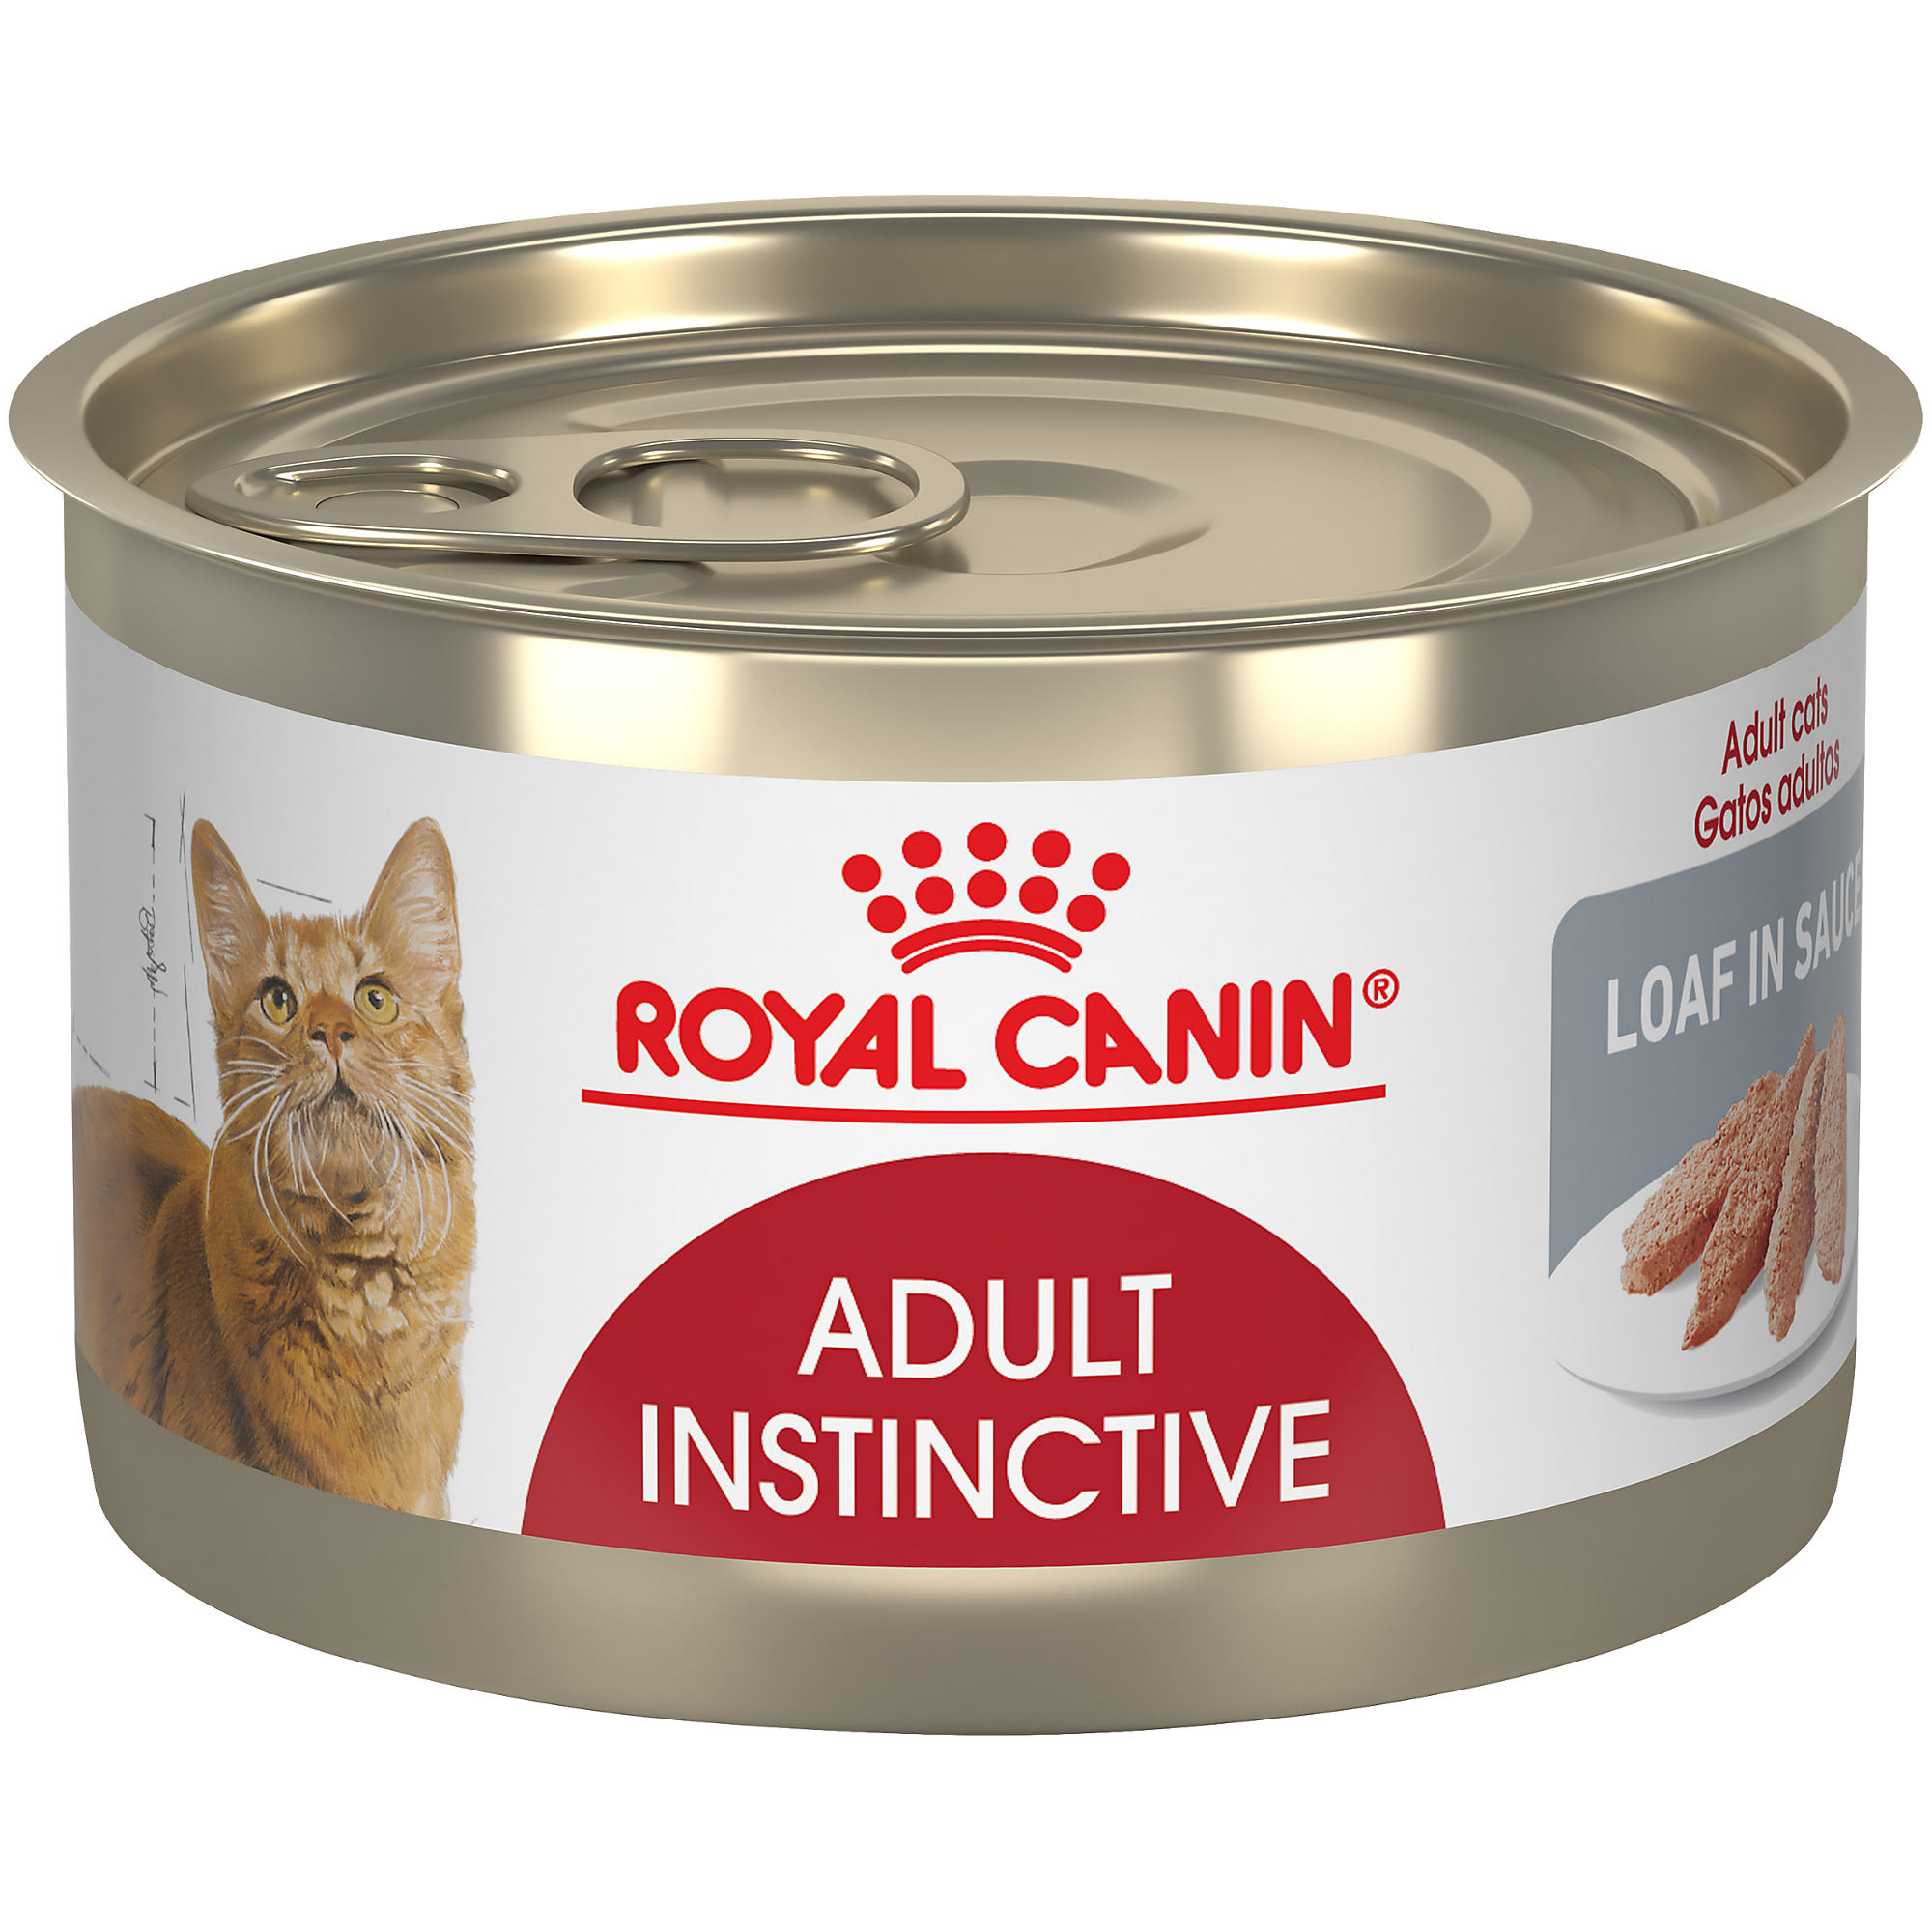 Royal Canin Adult Instinctive Loaf in Sauce Wet Cat Food, 5.1 oz. Petco